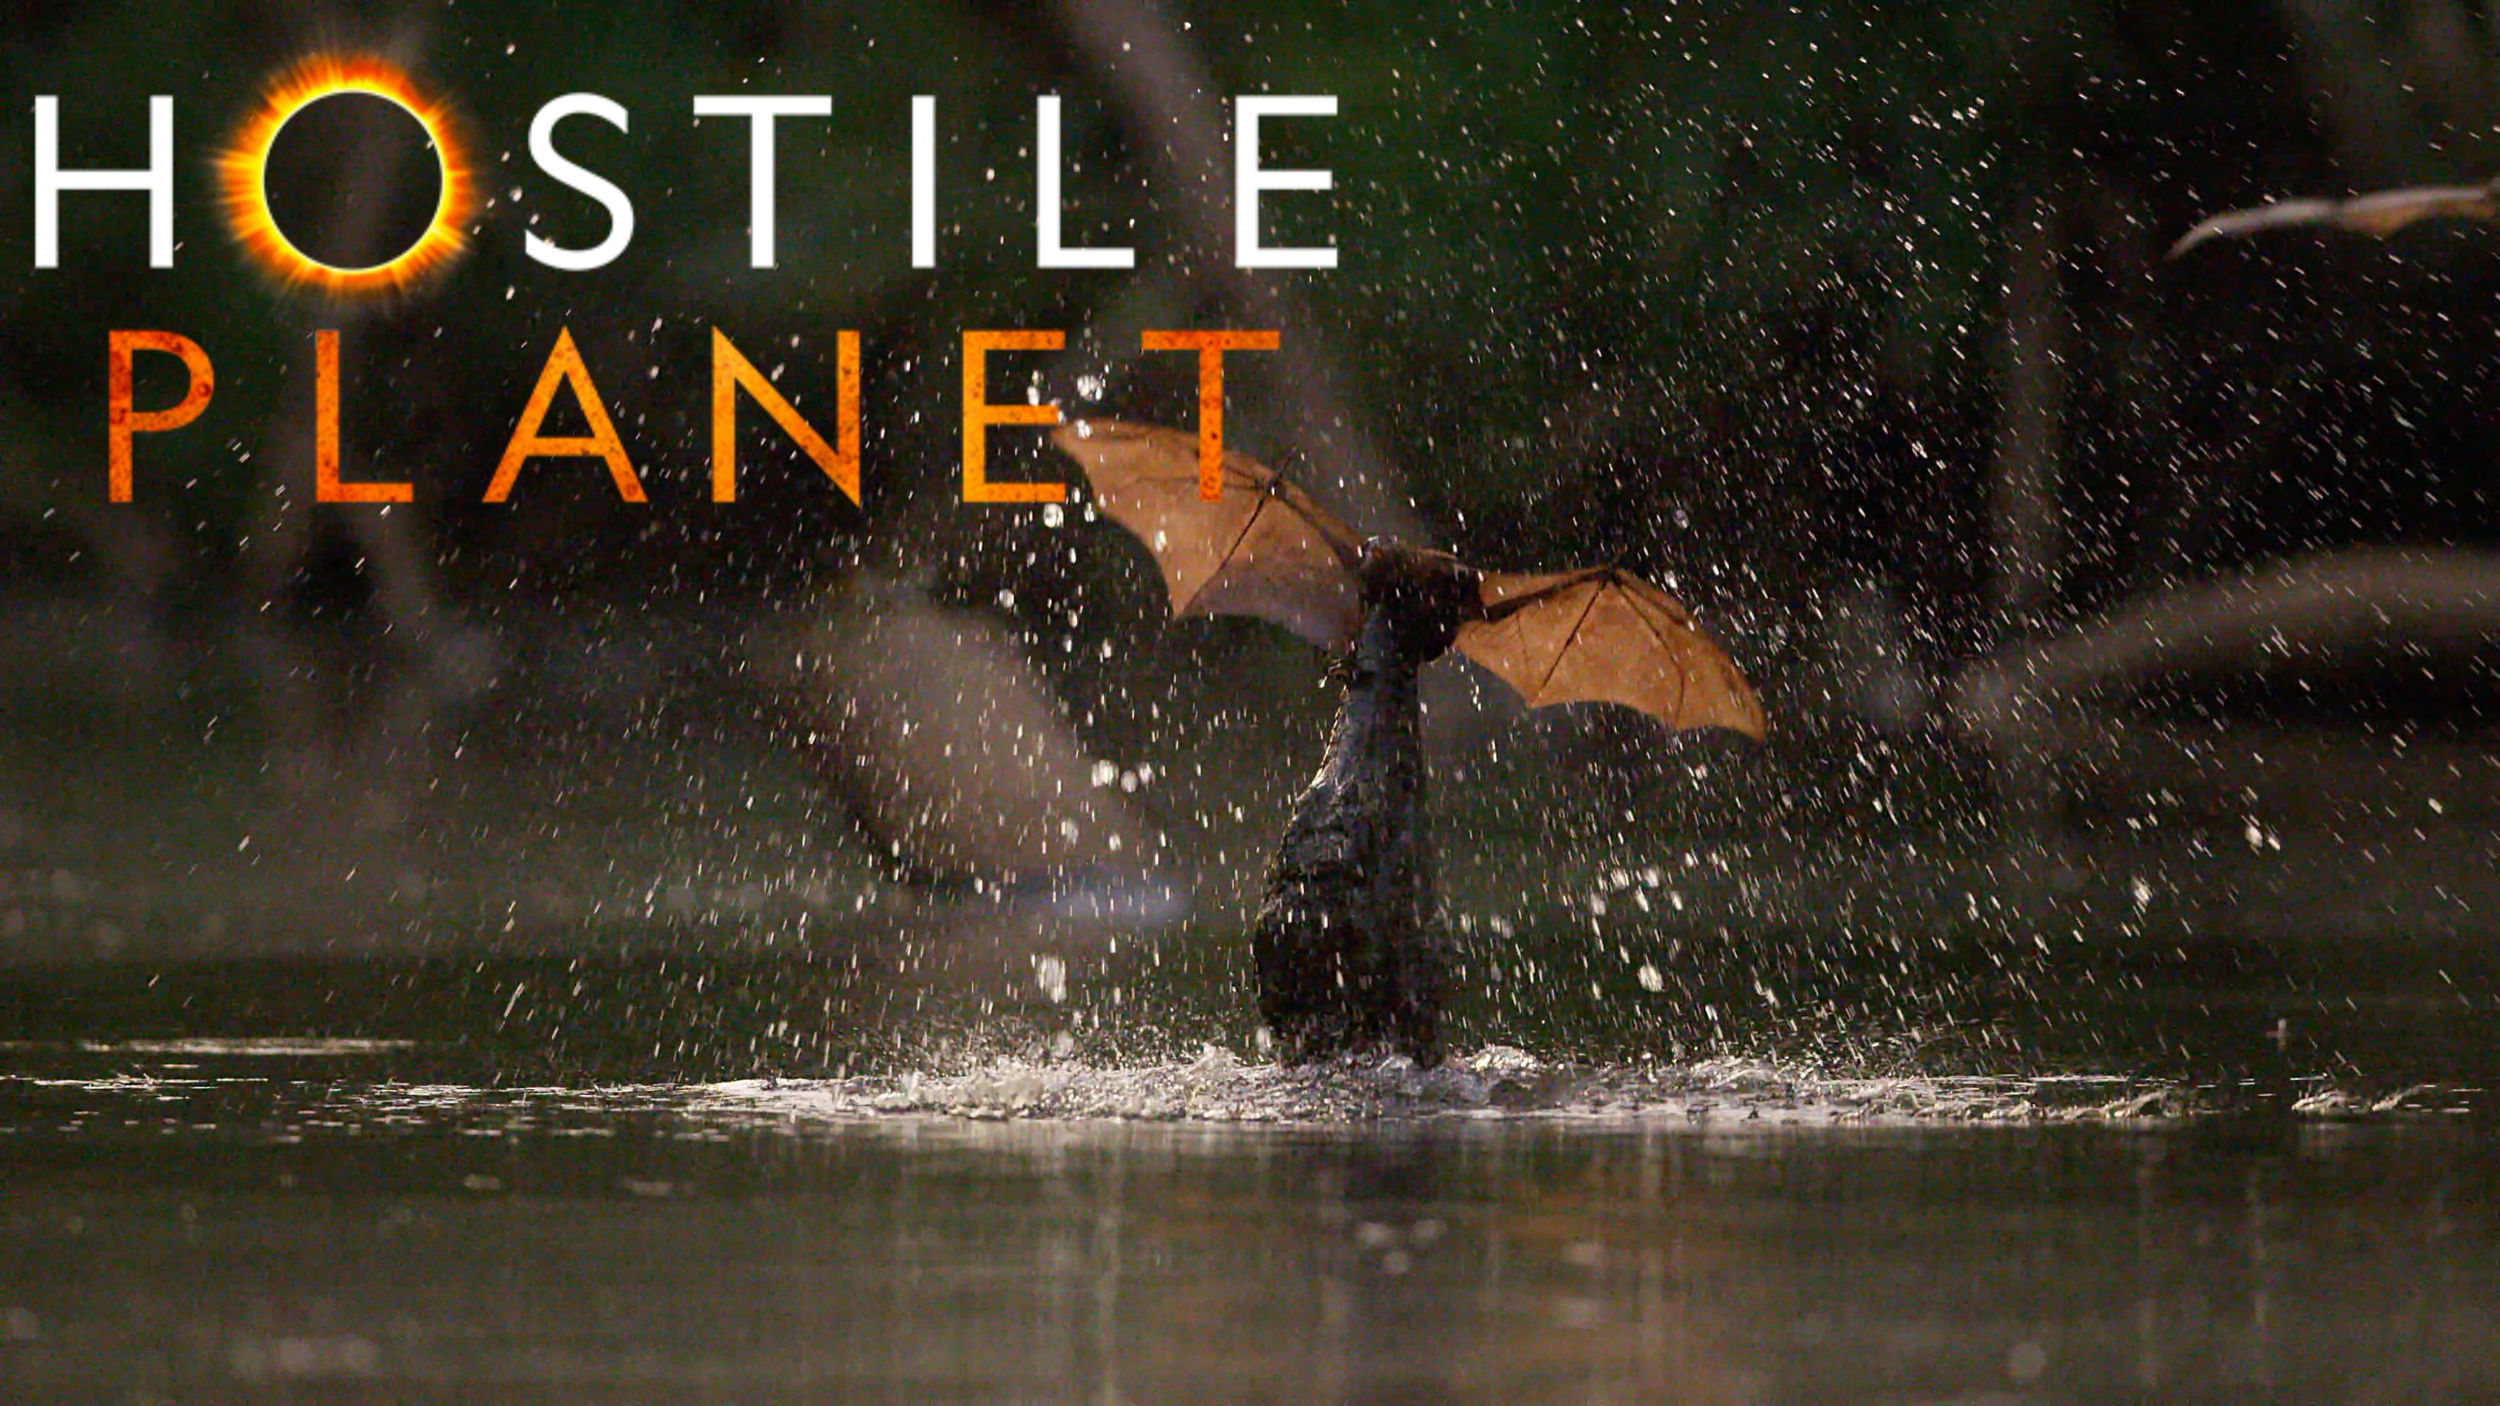 National Geographic - Hostile Planet (bats &amp; crocodiles, red kangaroos)